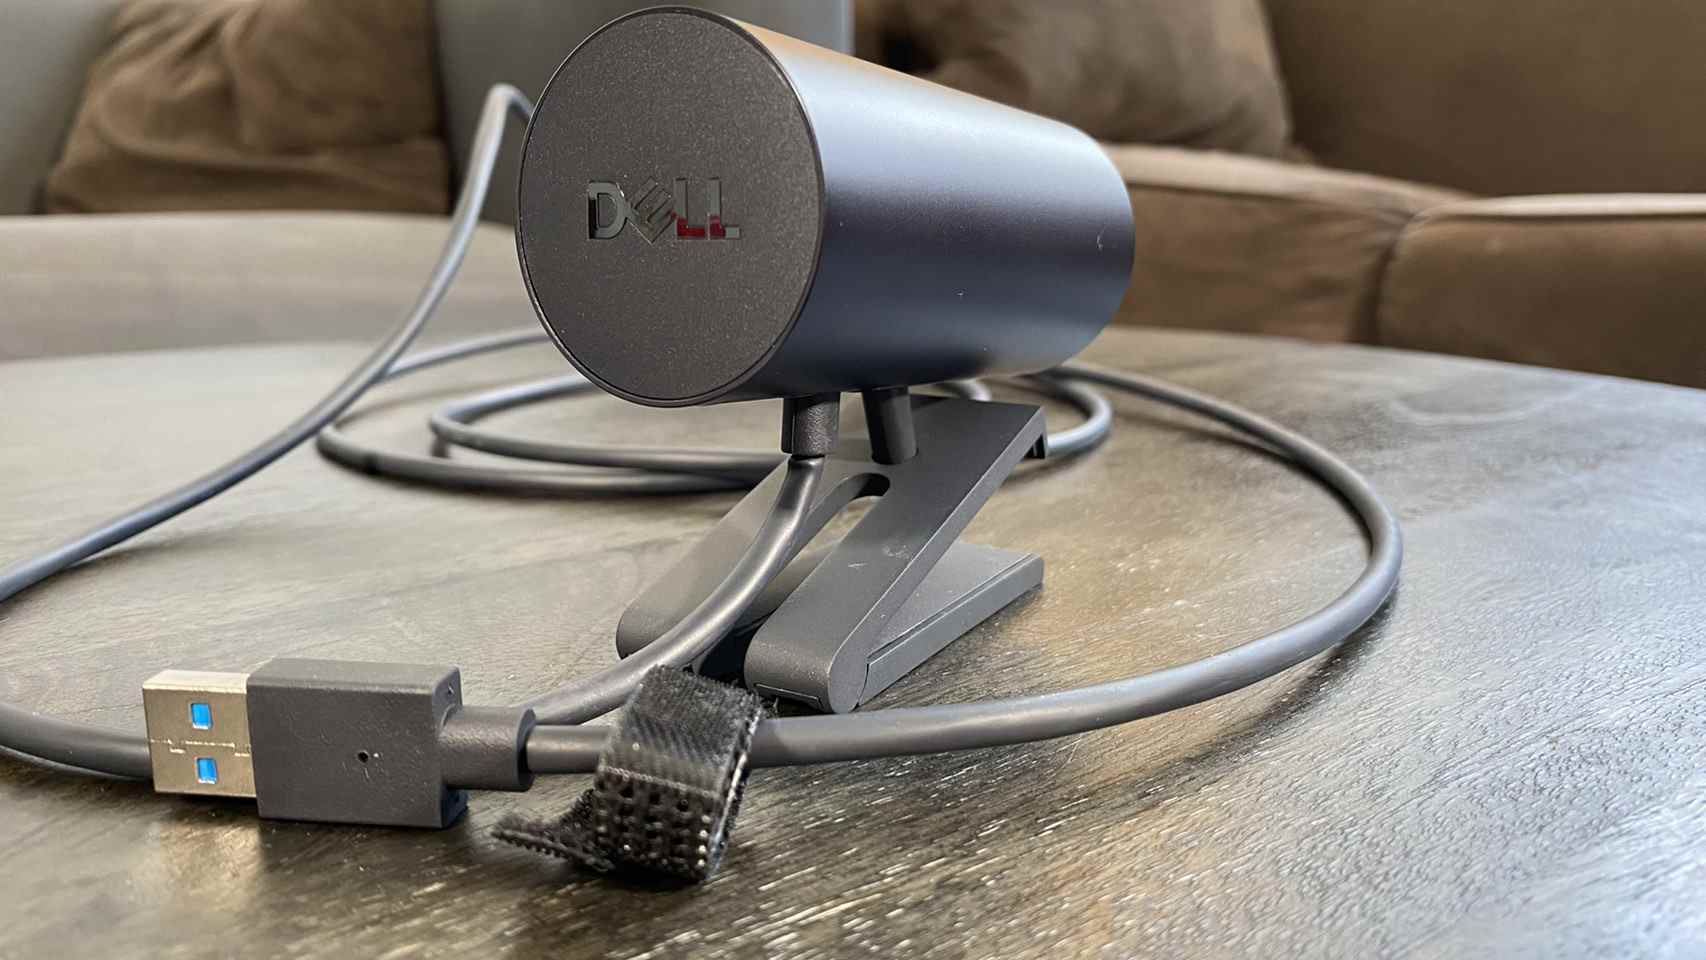 La webcam Dell Ultrasharp utilise USB 3.0 / 3.1 / 3.2